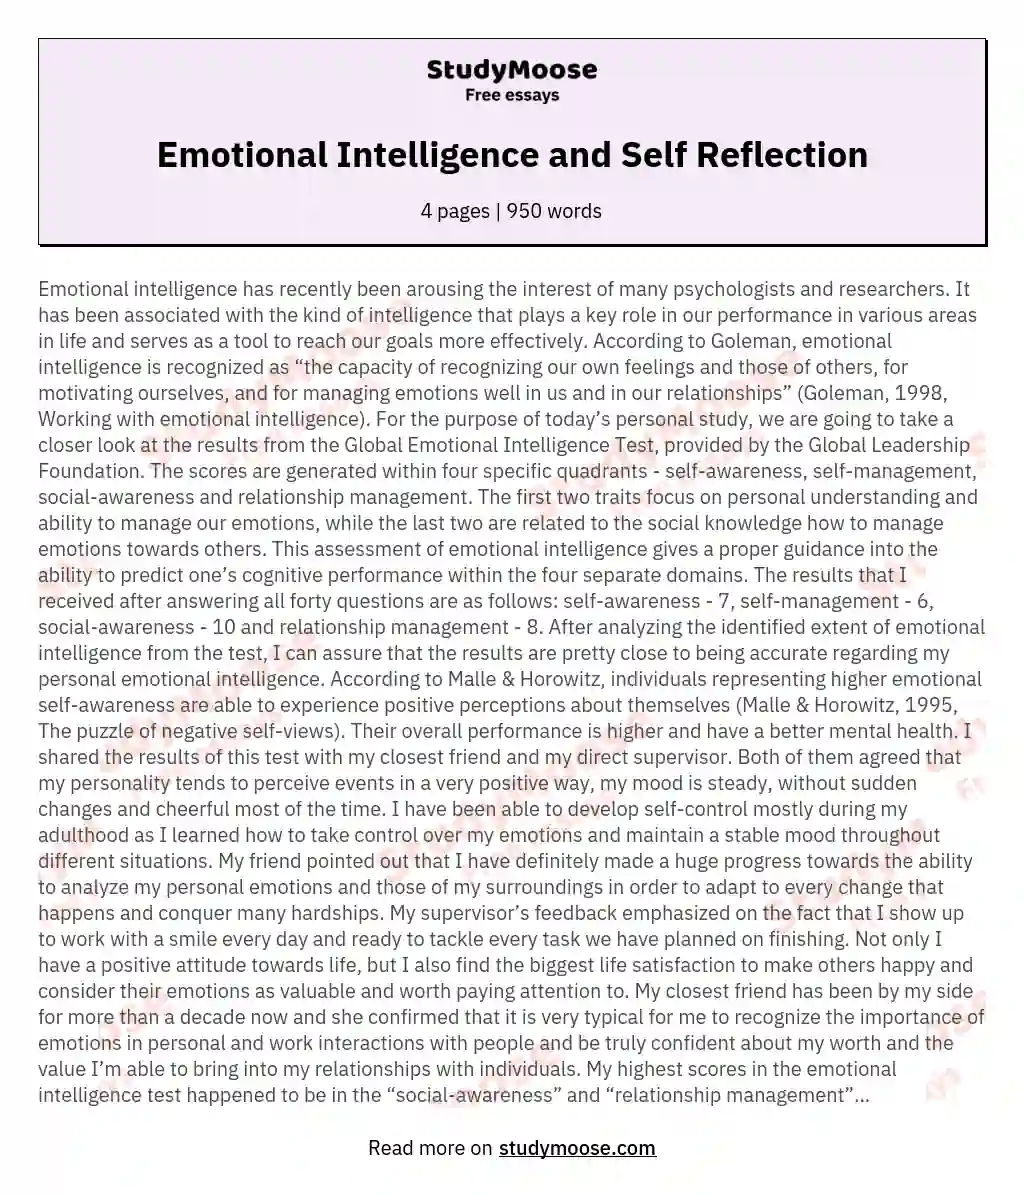 emotional intelligence speech essay